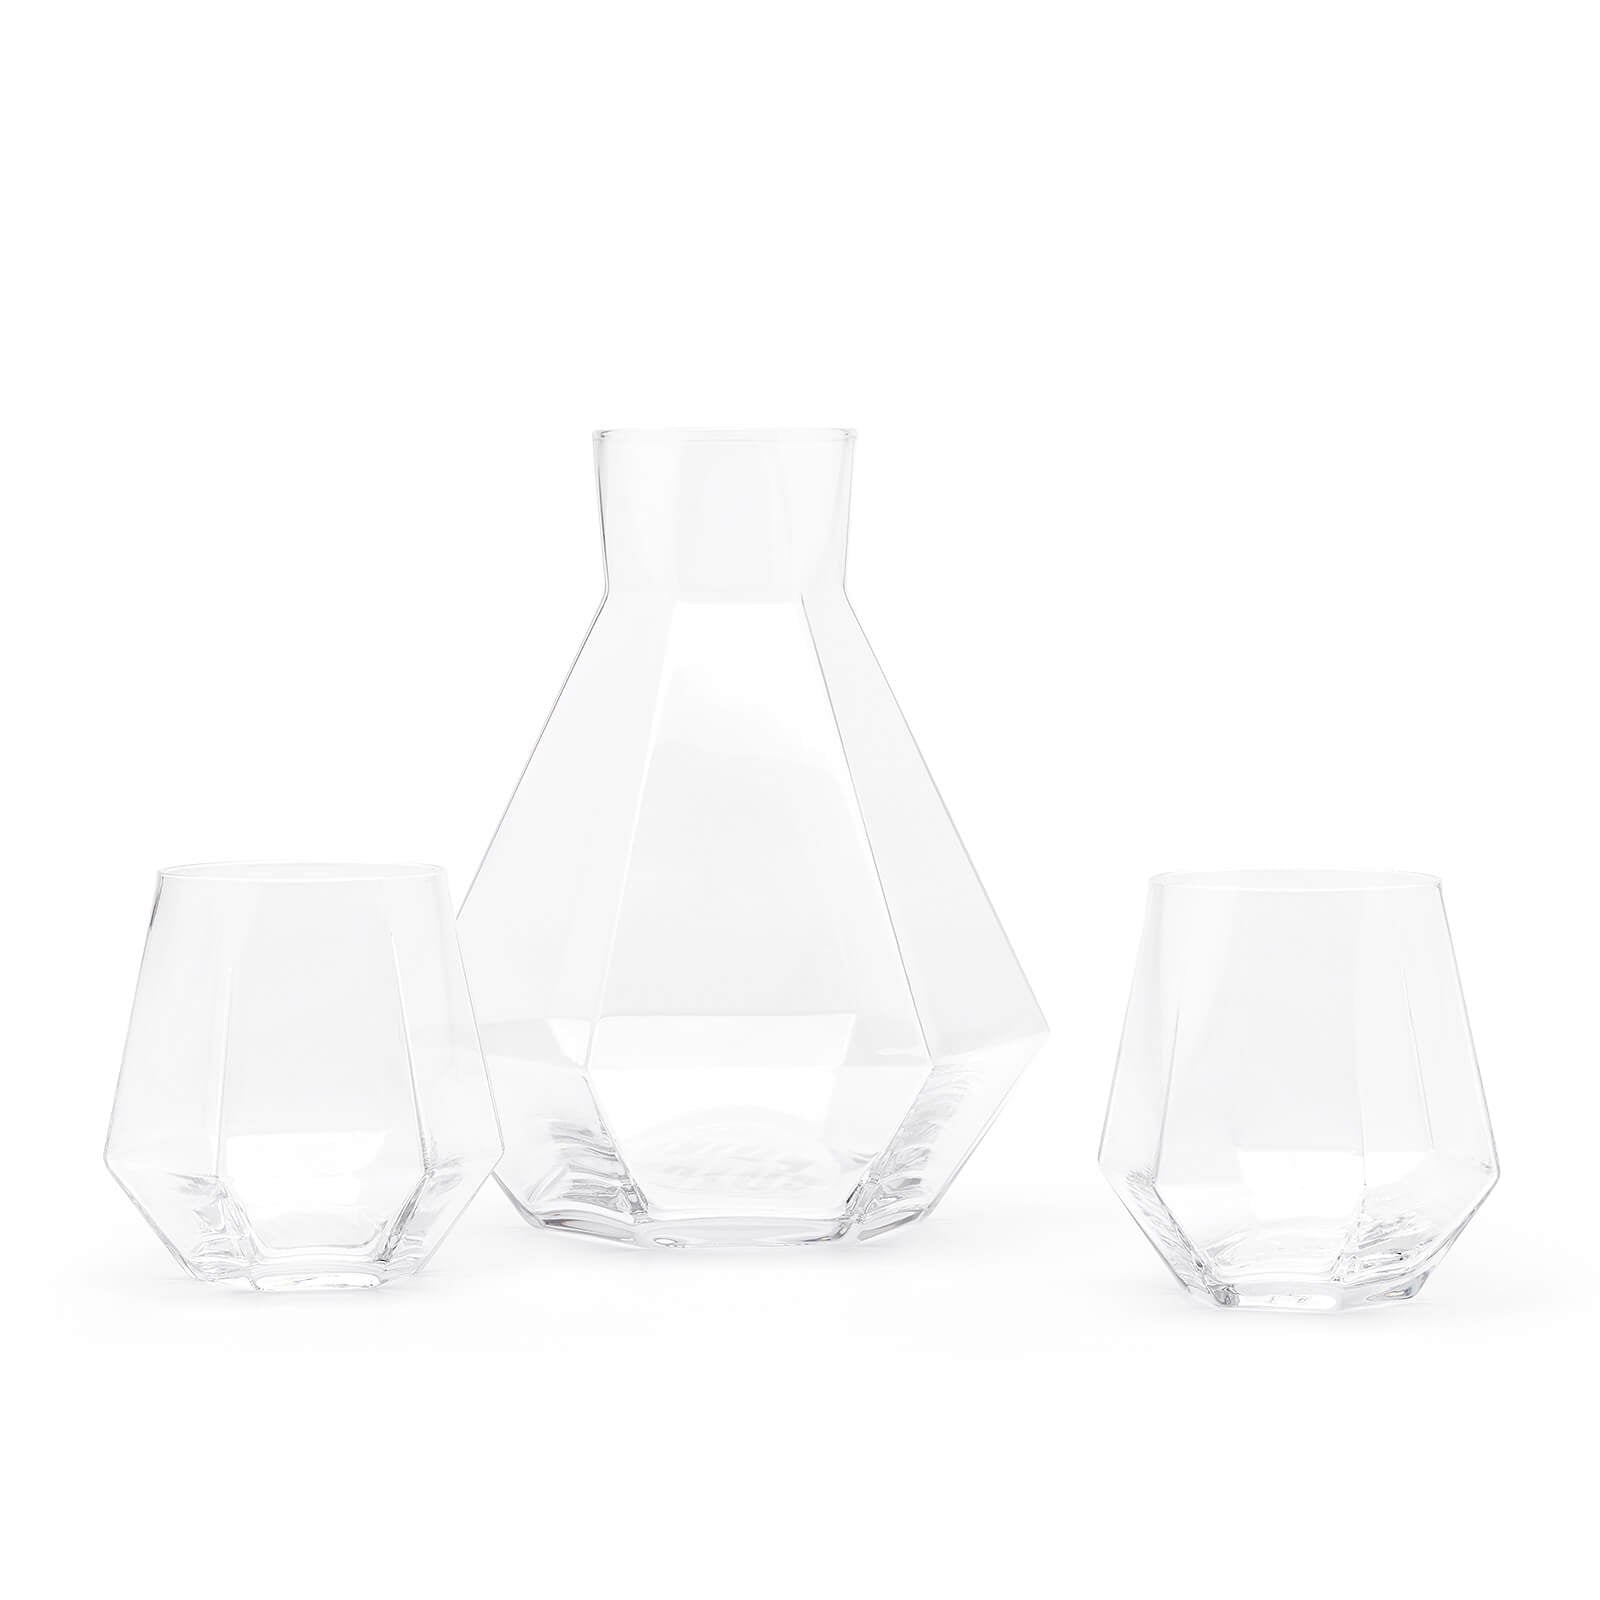 Puik Designs Crystal Drinking Glasses (Set of 2)